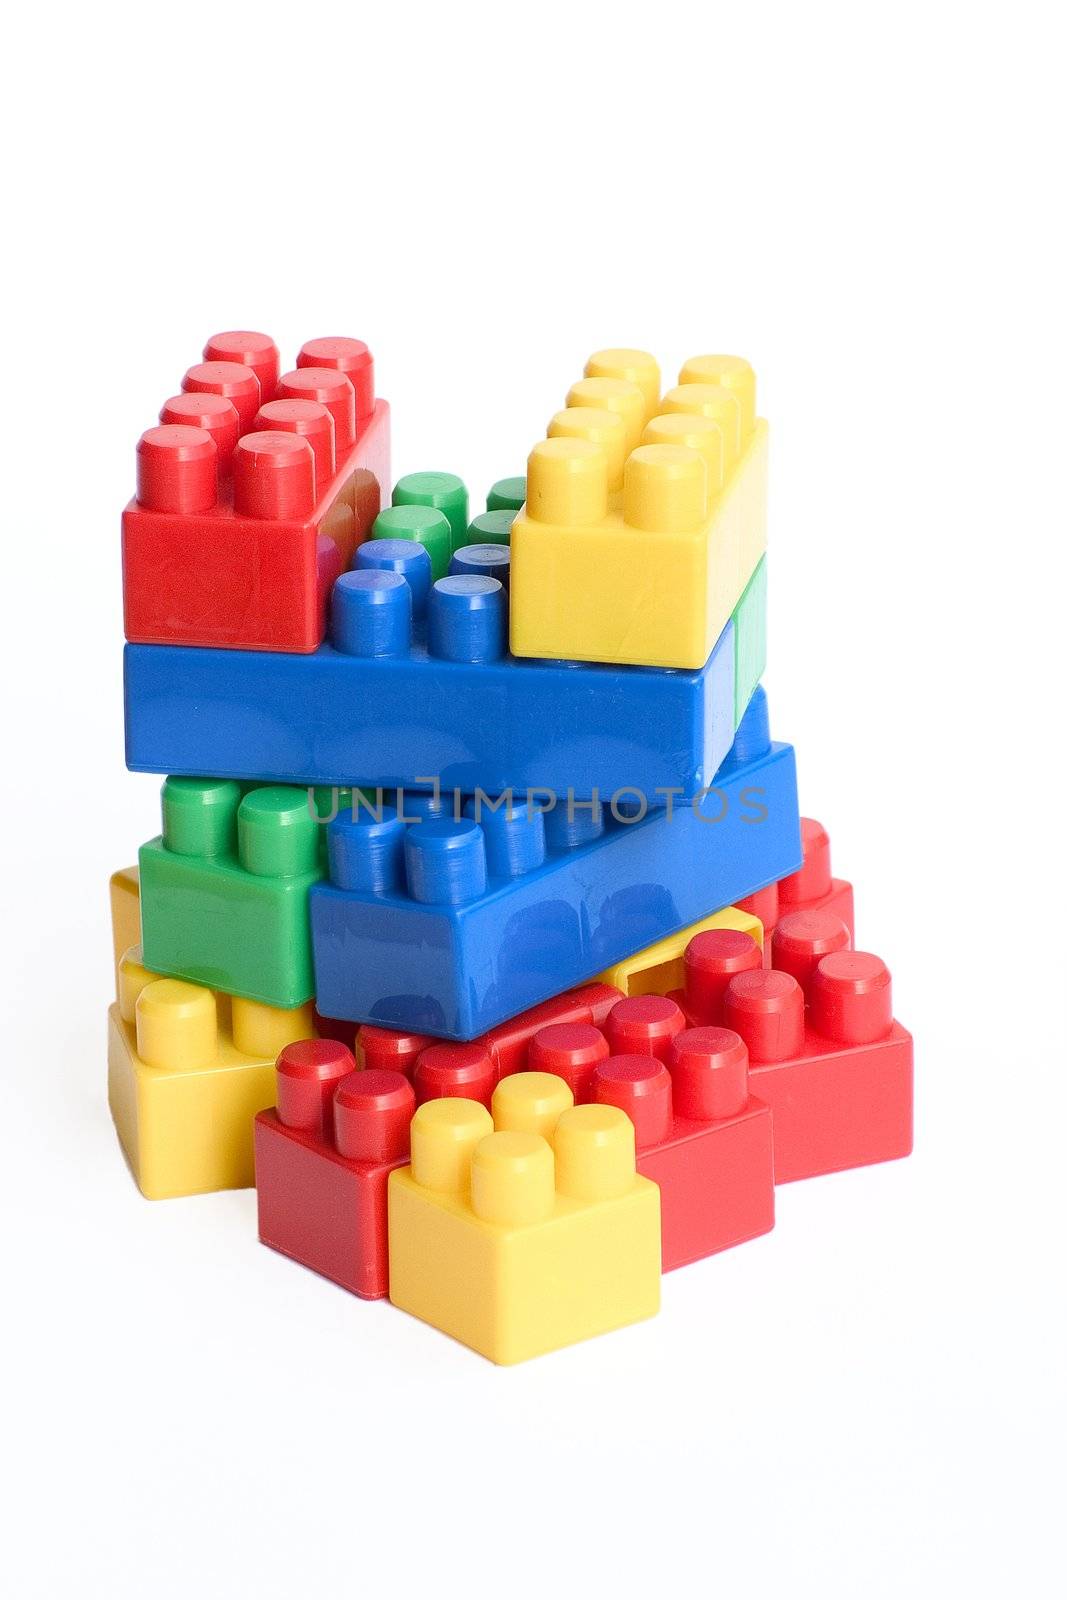 colored blocks by miradrozdowski